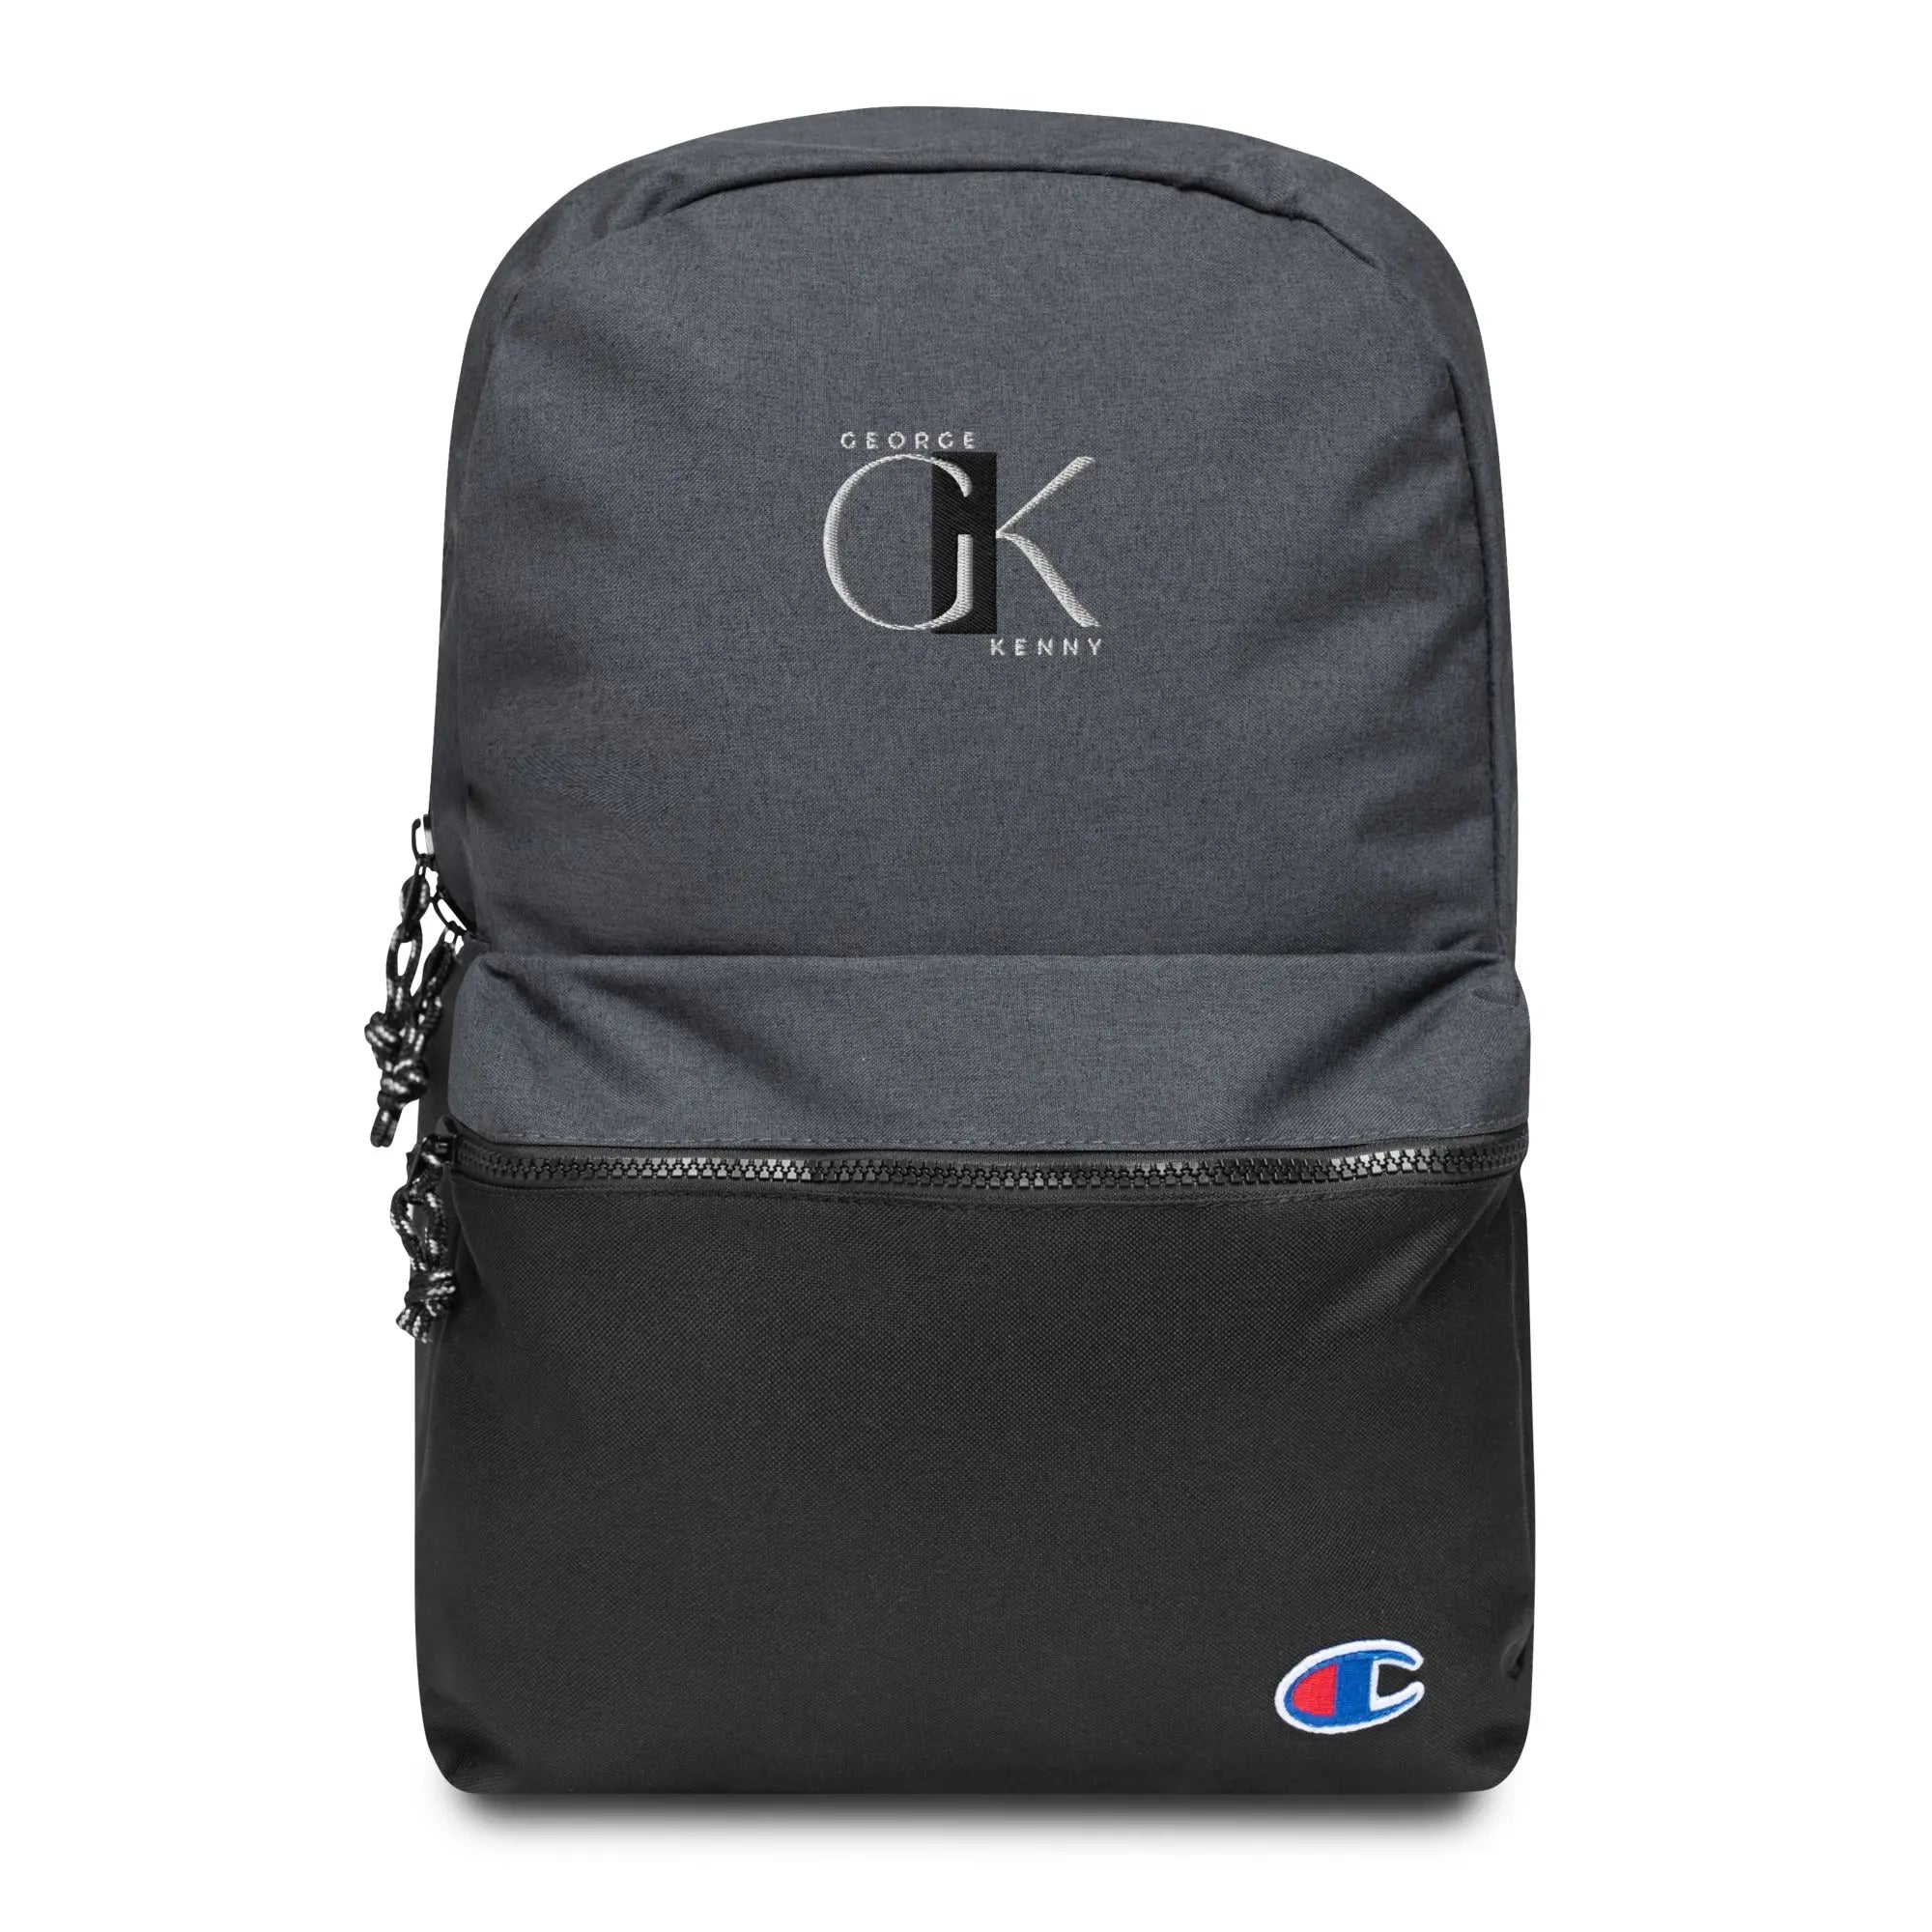 GK | Embroidered Champion Backpack GeorgeKenny Design